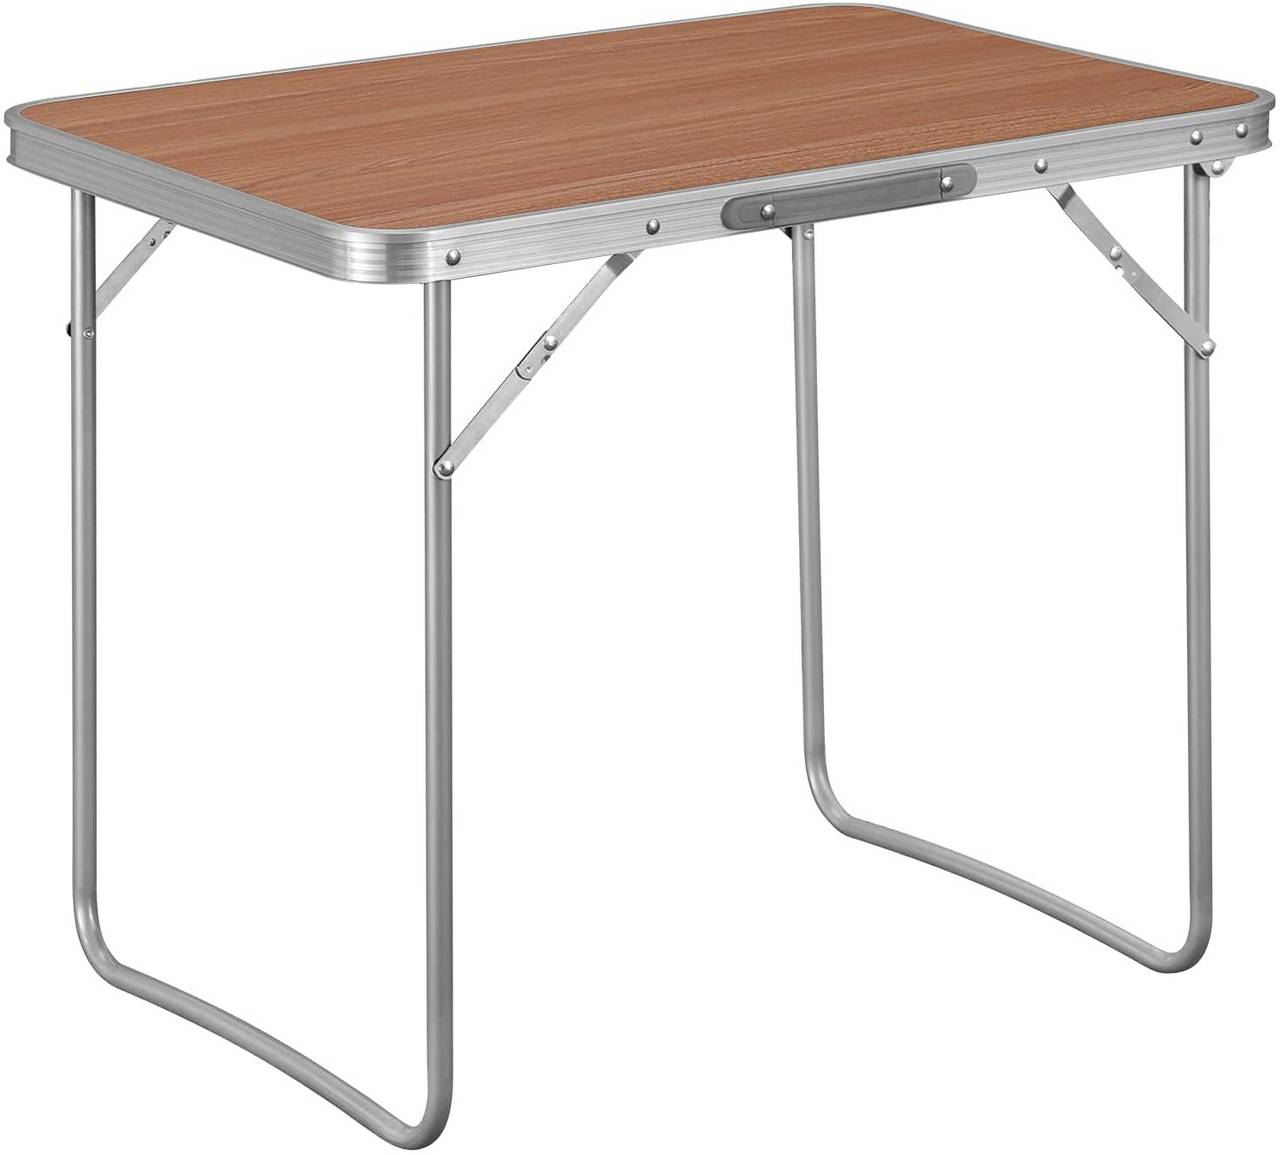 Table de Camping Table Pliante en Aluminium et MDF Table de Pique